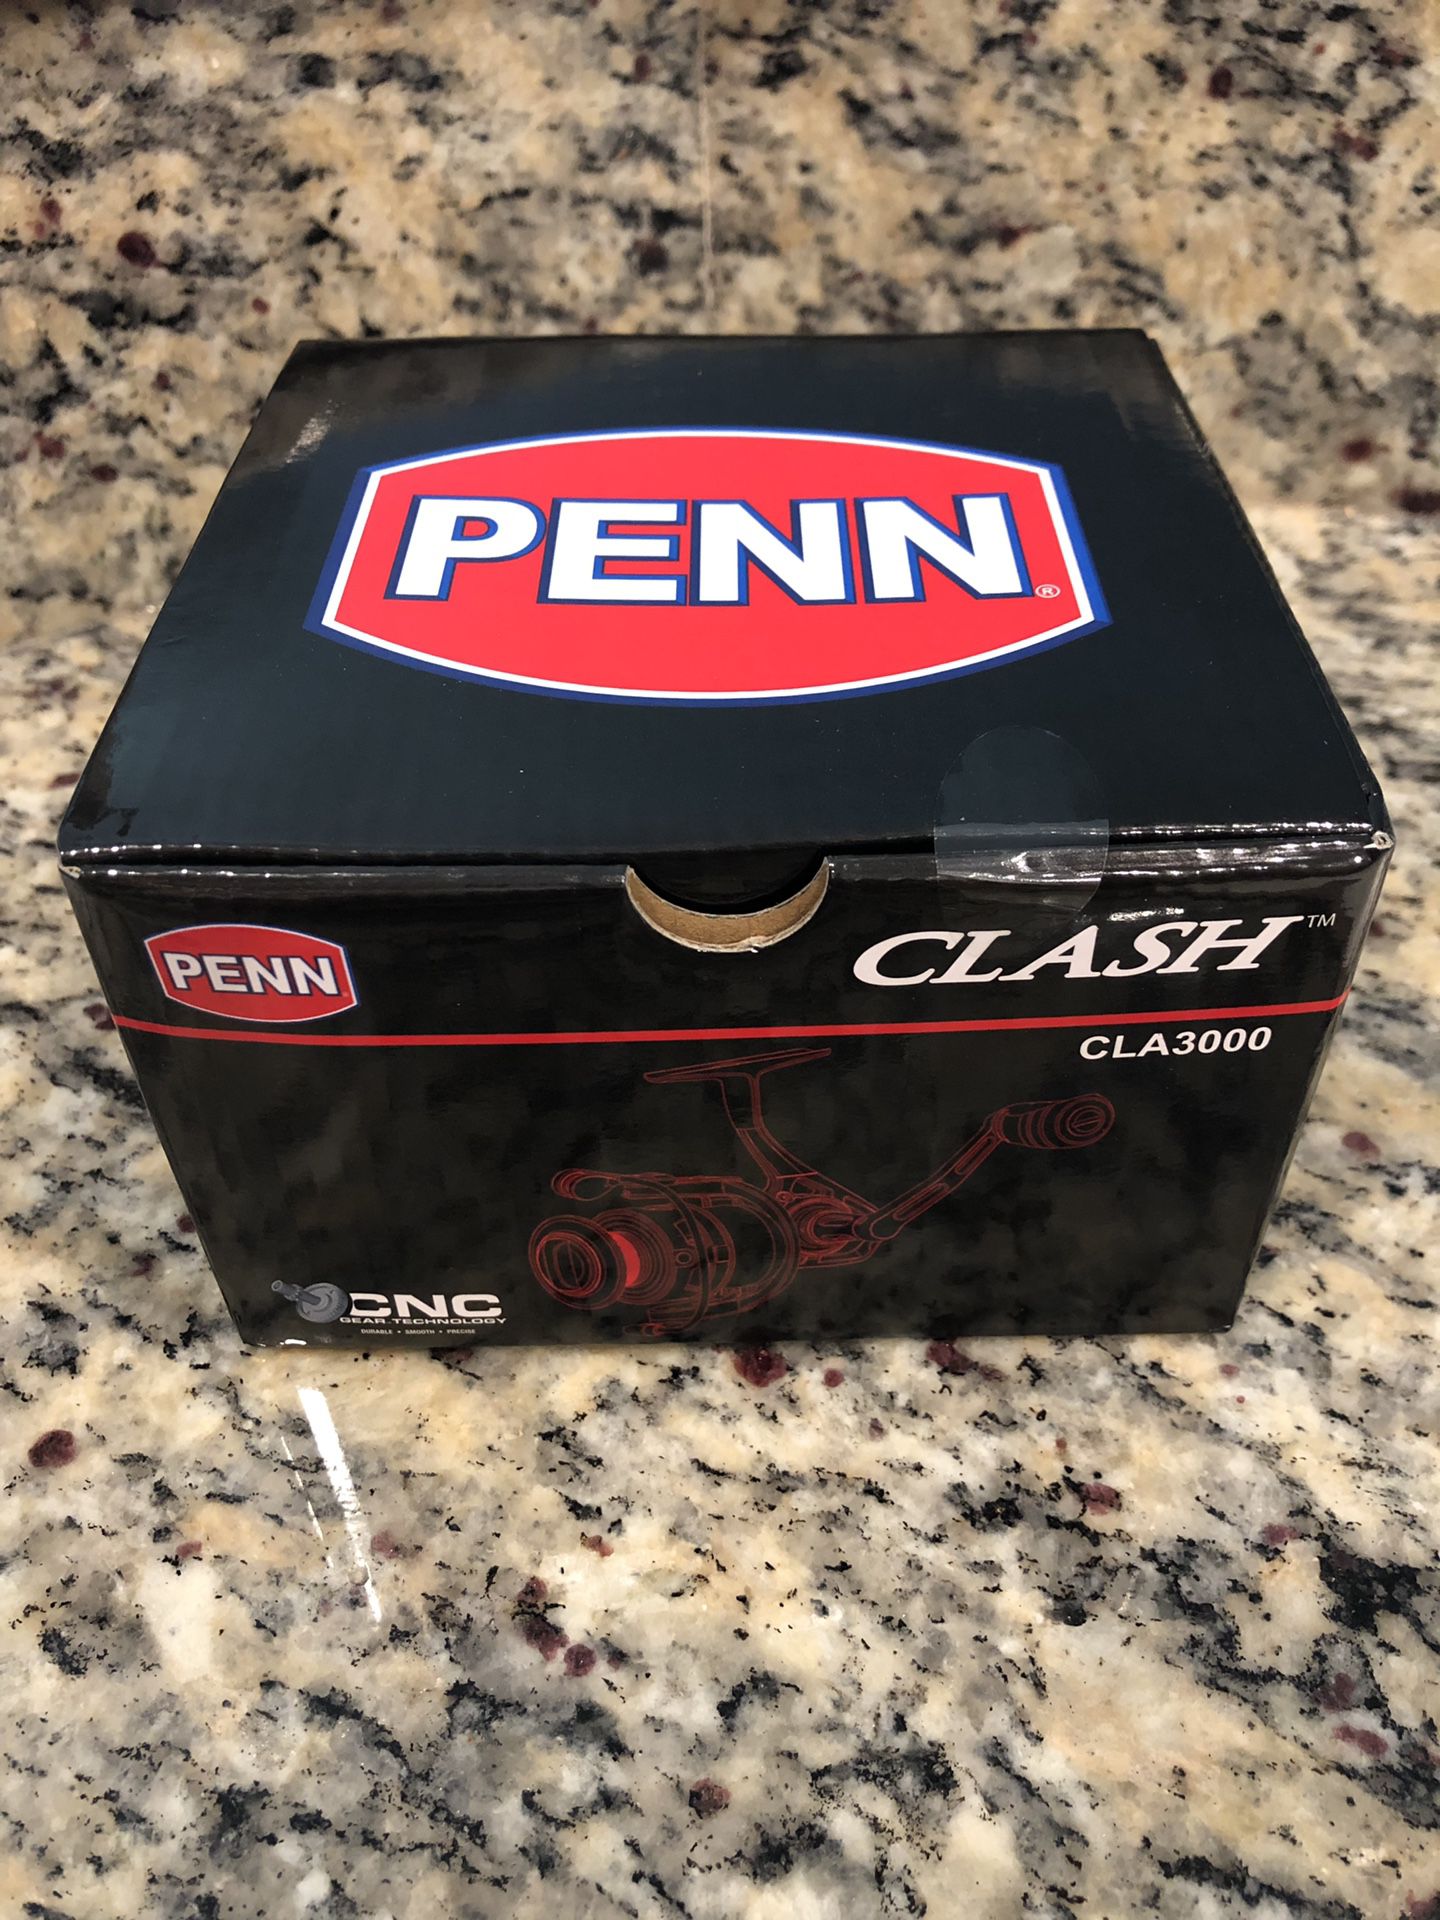 New Penn Clash 3000 Fishing Reel